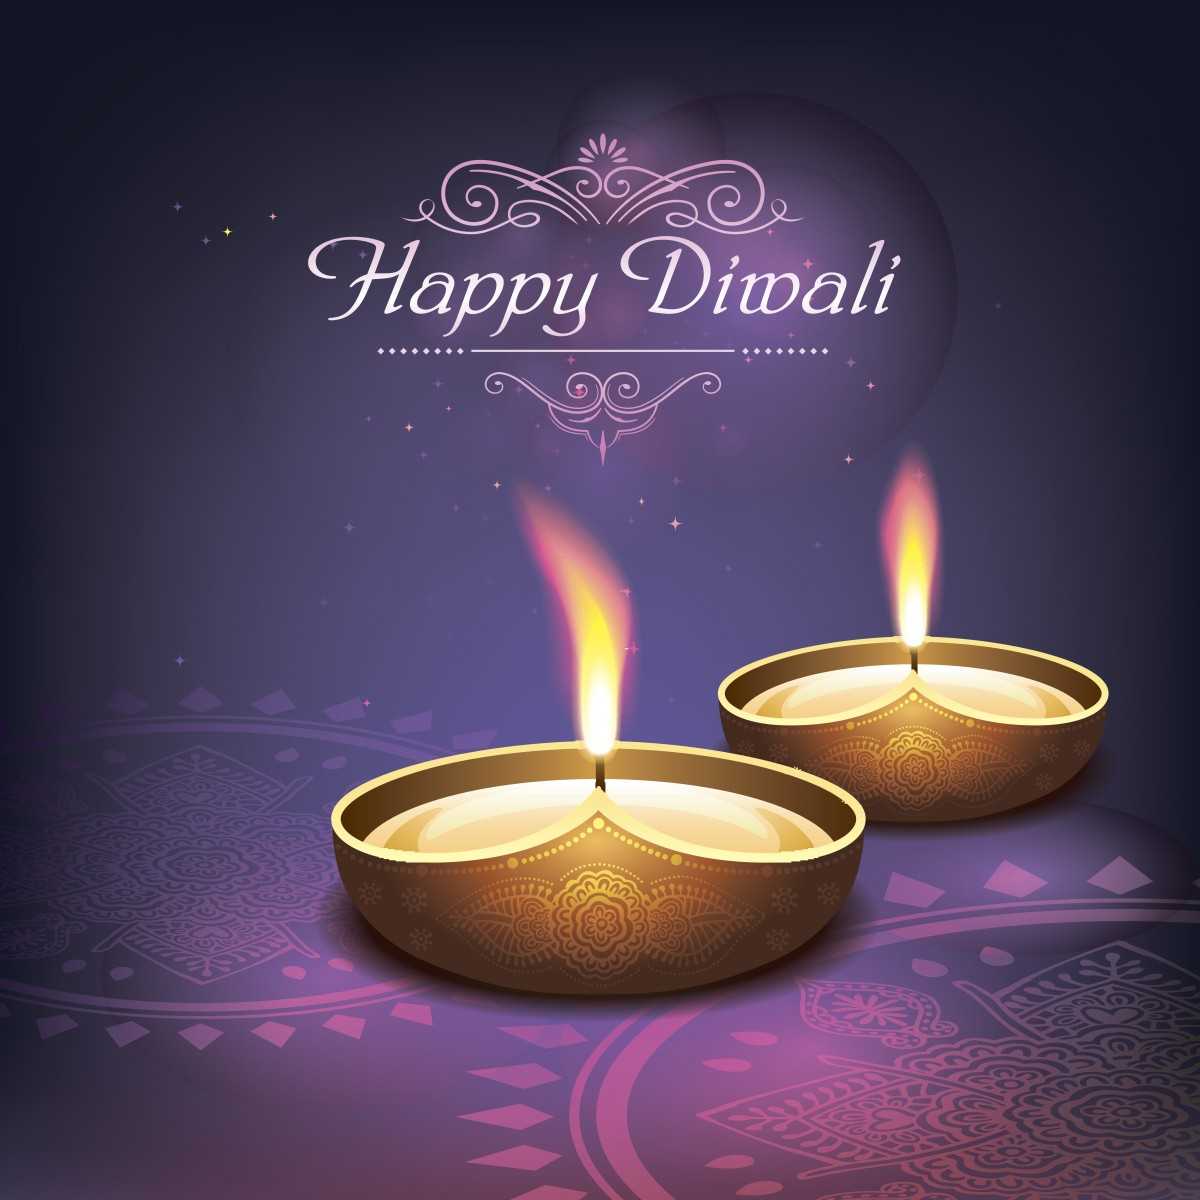 Happy Diwali Whatsapp Dp